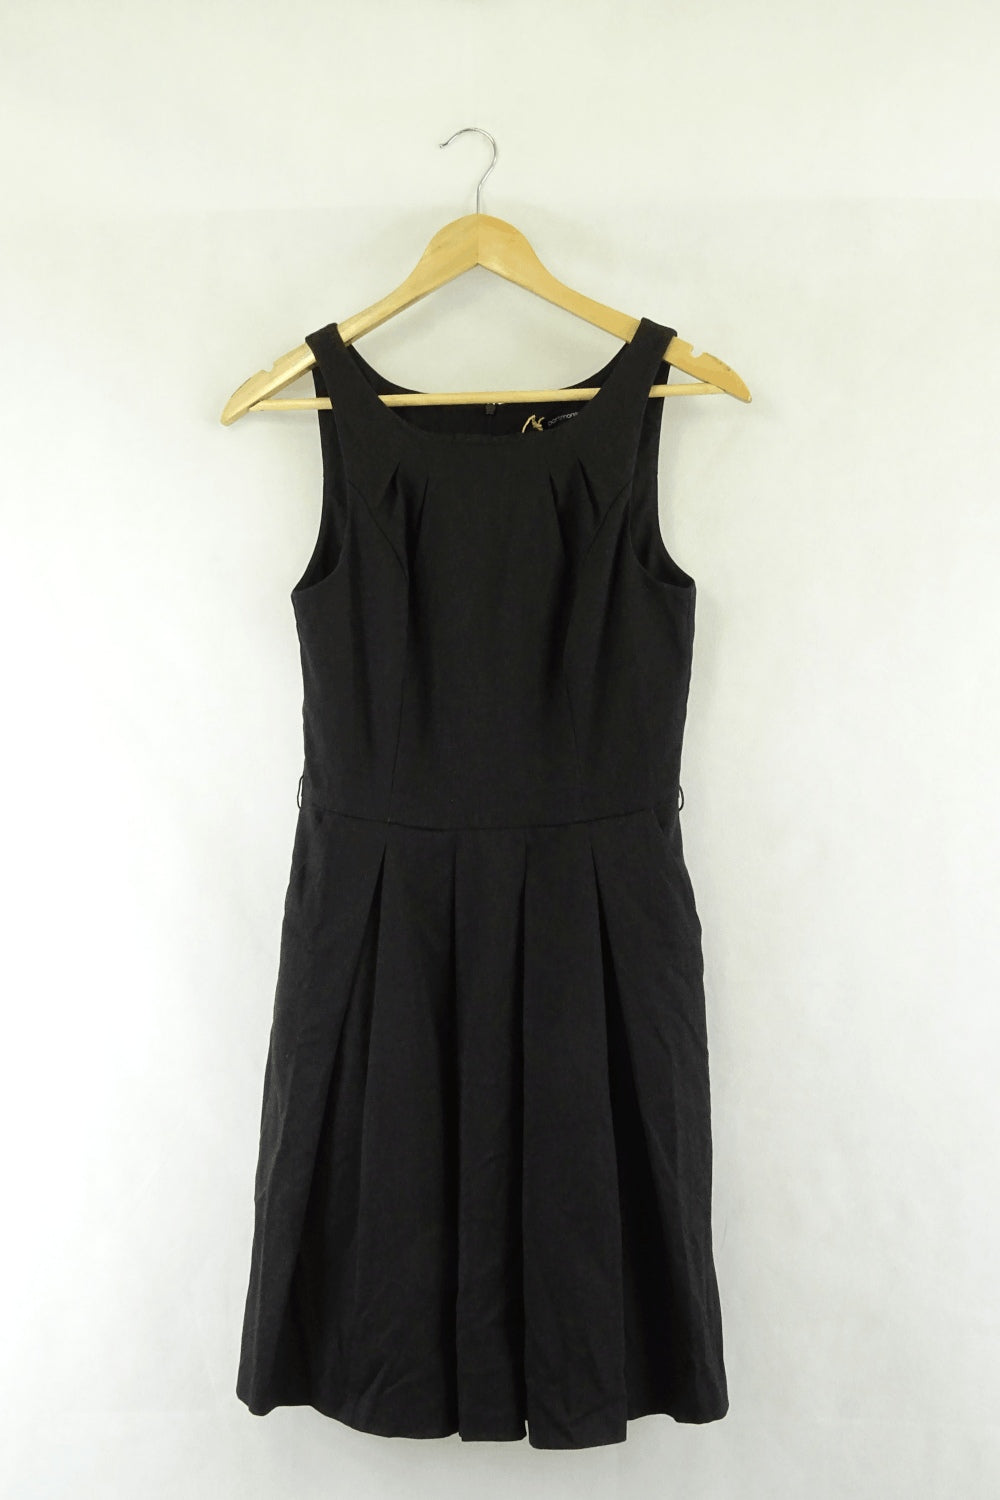 Portmans Black Dress 8